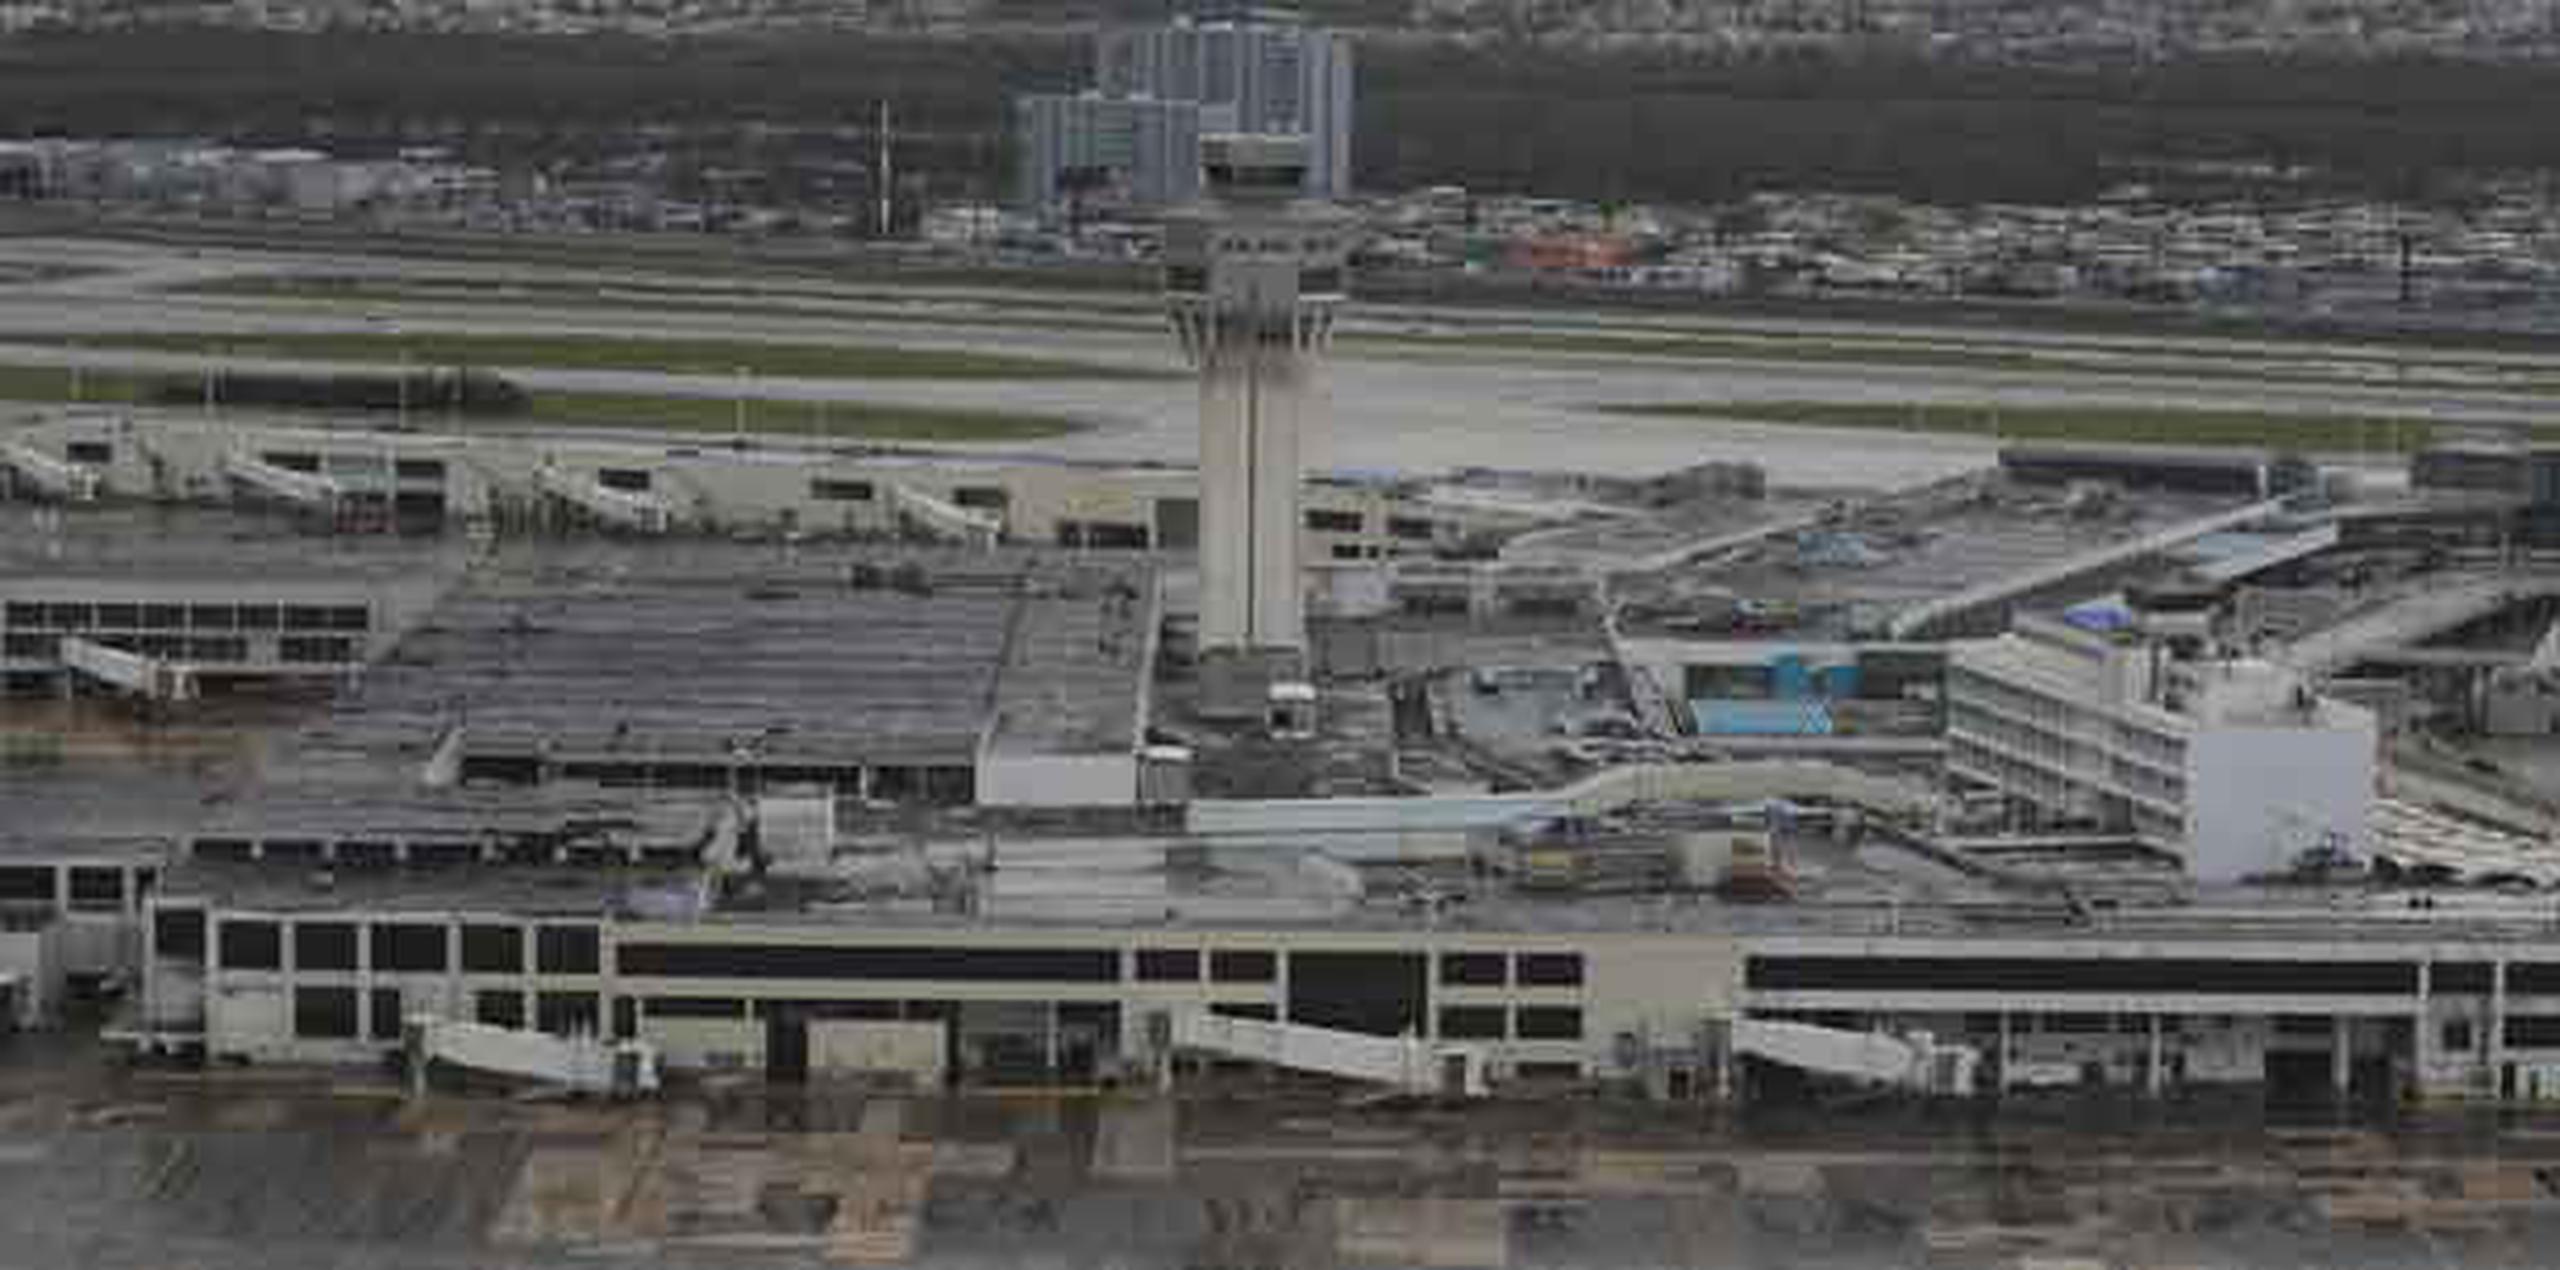 El Aeropuerto Internacional Luis Muñoz Marín. (teresa.canico@gfrmedia.com)